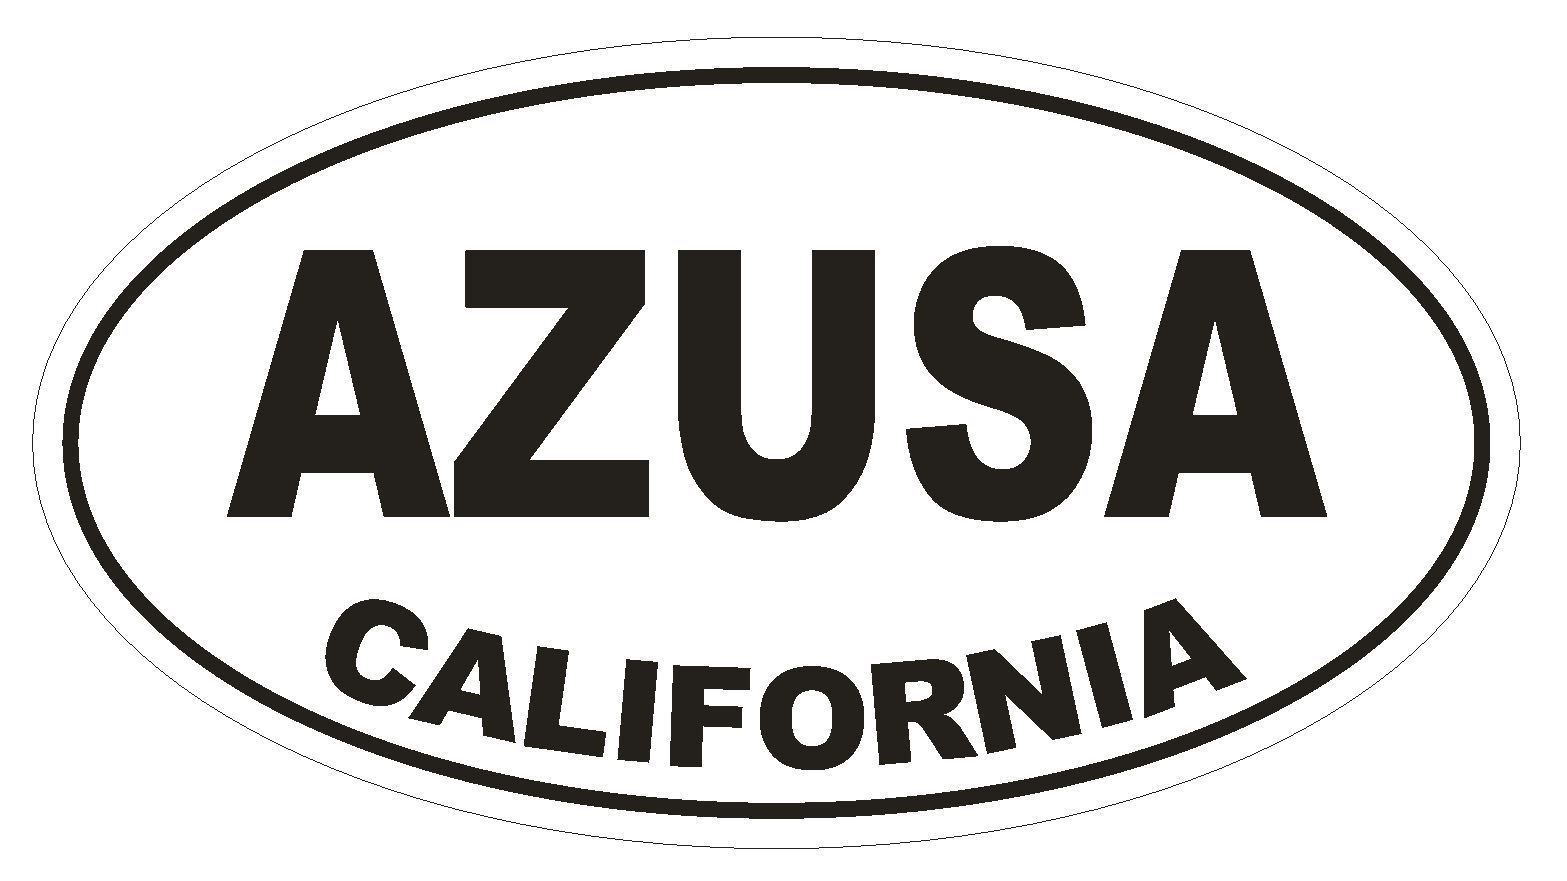 Azusa California Oval Bumper Sticker or Helmet Sticker D2762 Euro Oval - $1.39 - $75.00